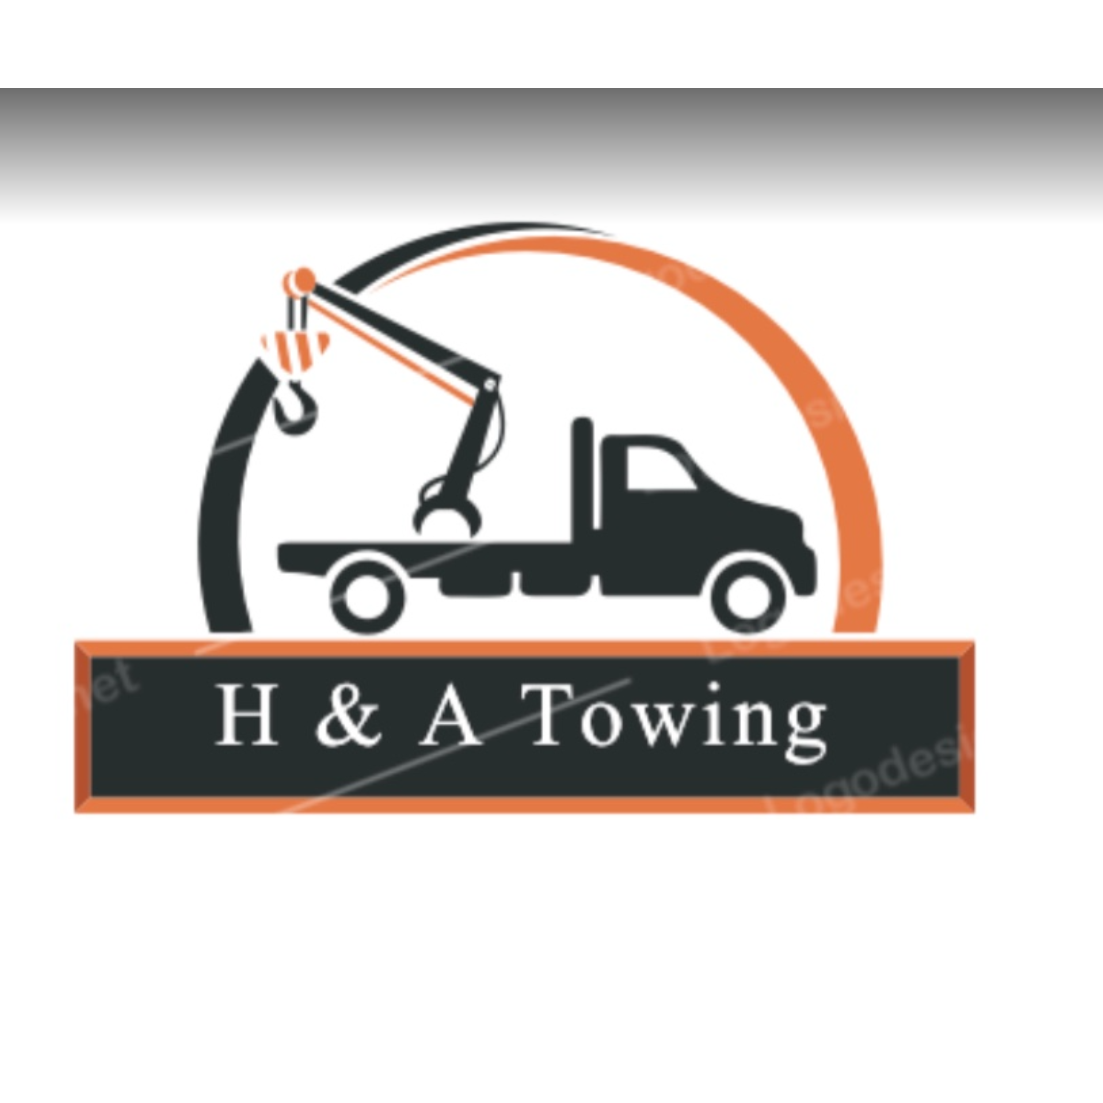 H & A Towing - Austin, TX - (512)999-8883 | ShowMeLocal.com